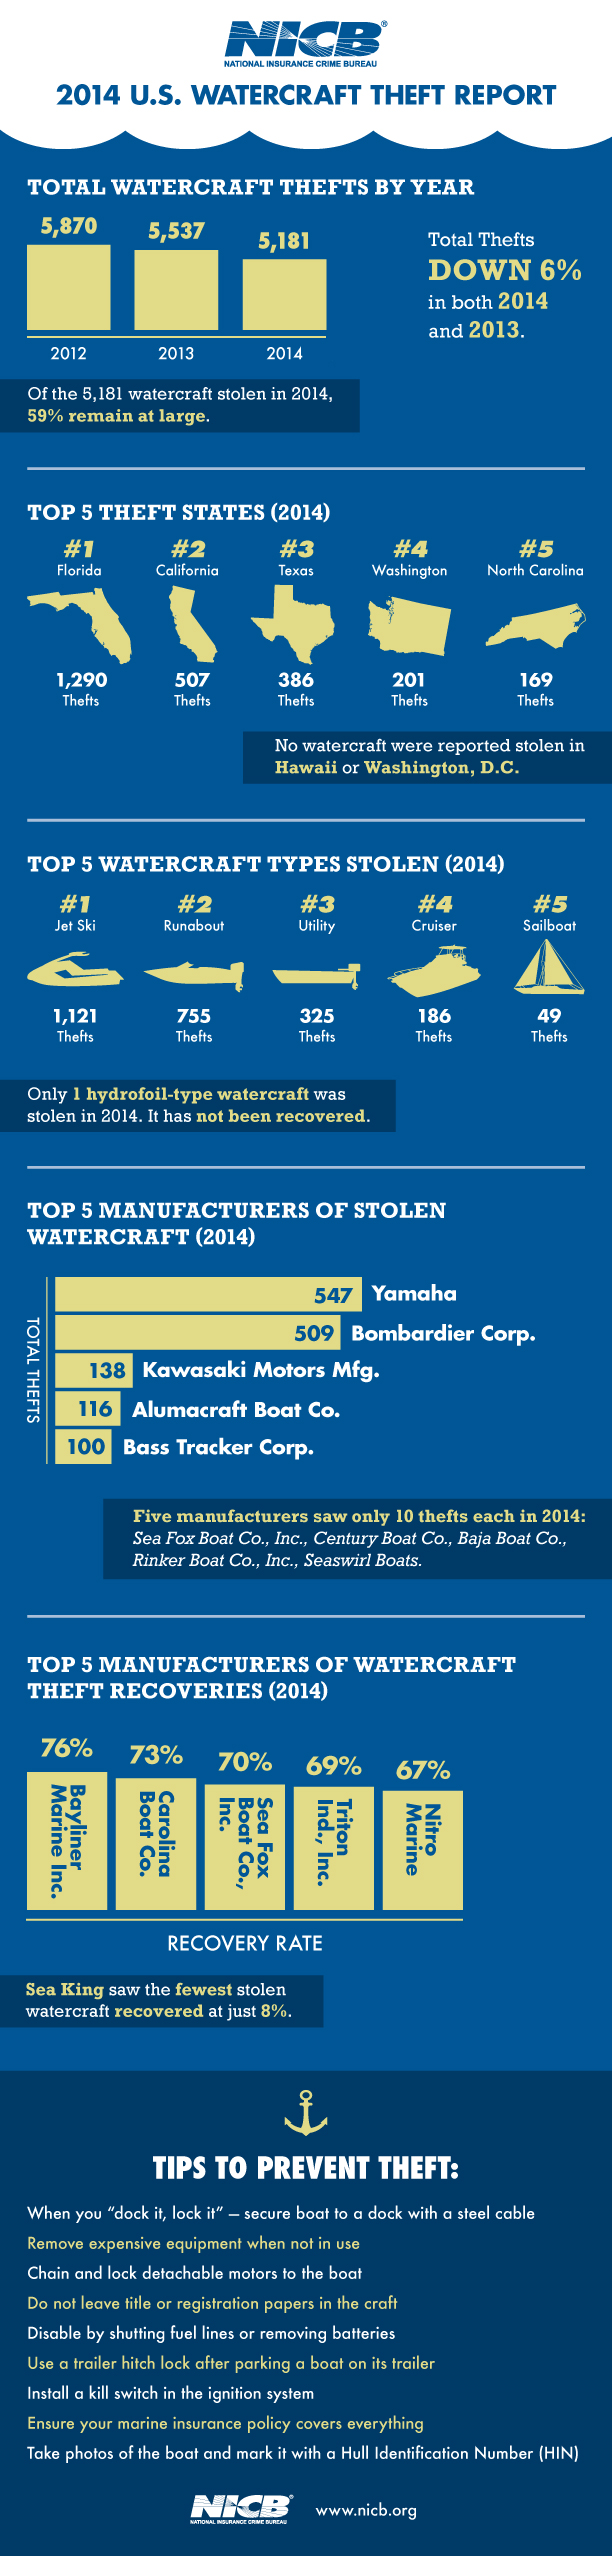 2014 Watercraft Theft infographic